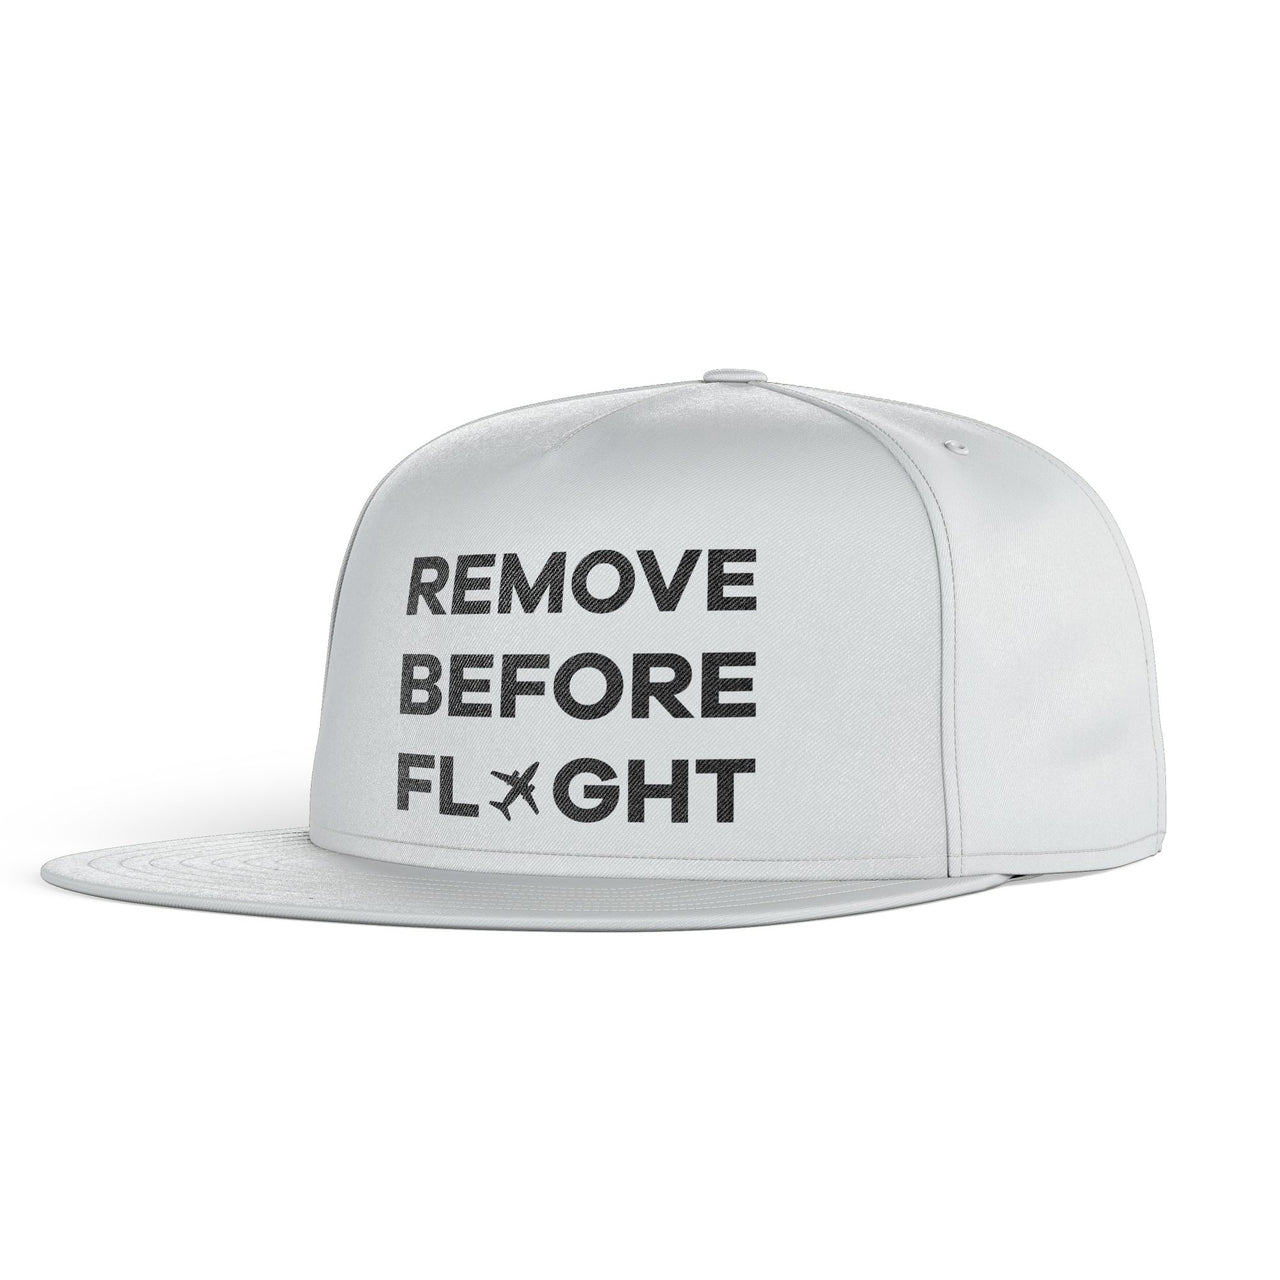 Remove Before Flight Designed Snapback Caps & Hats